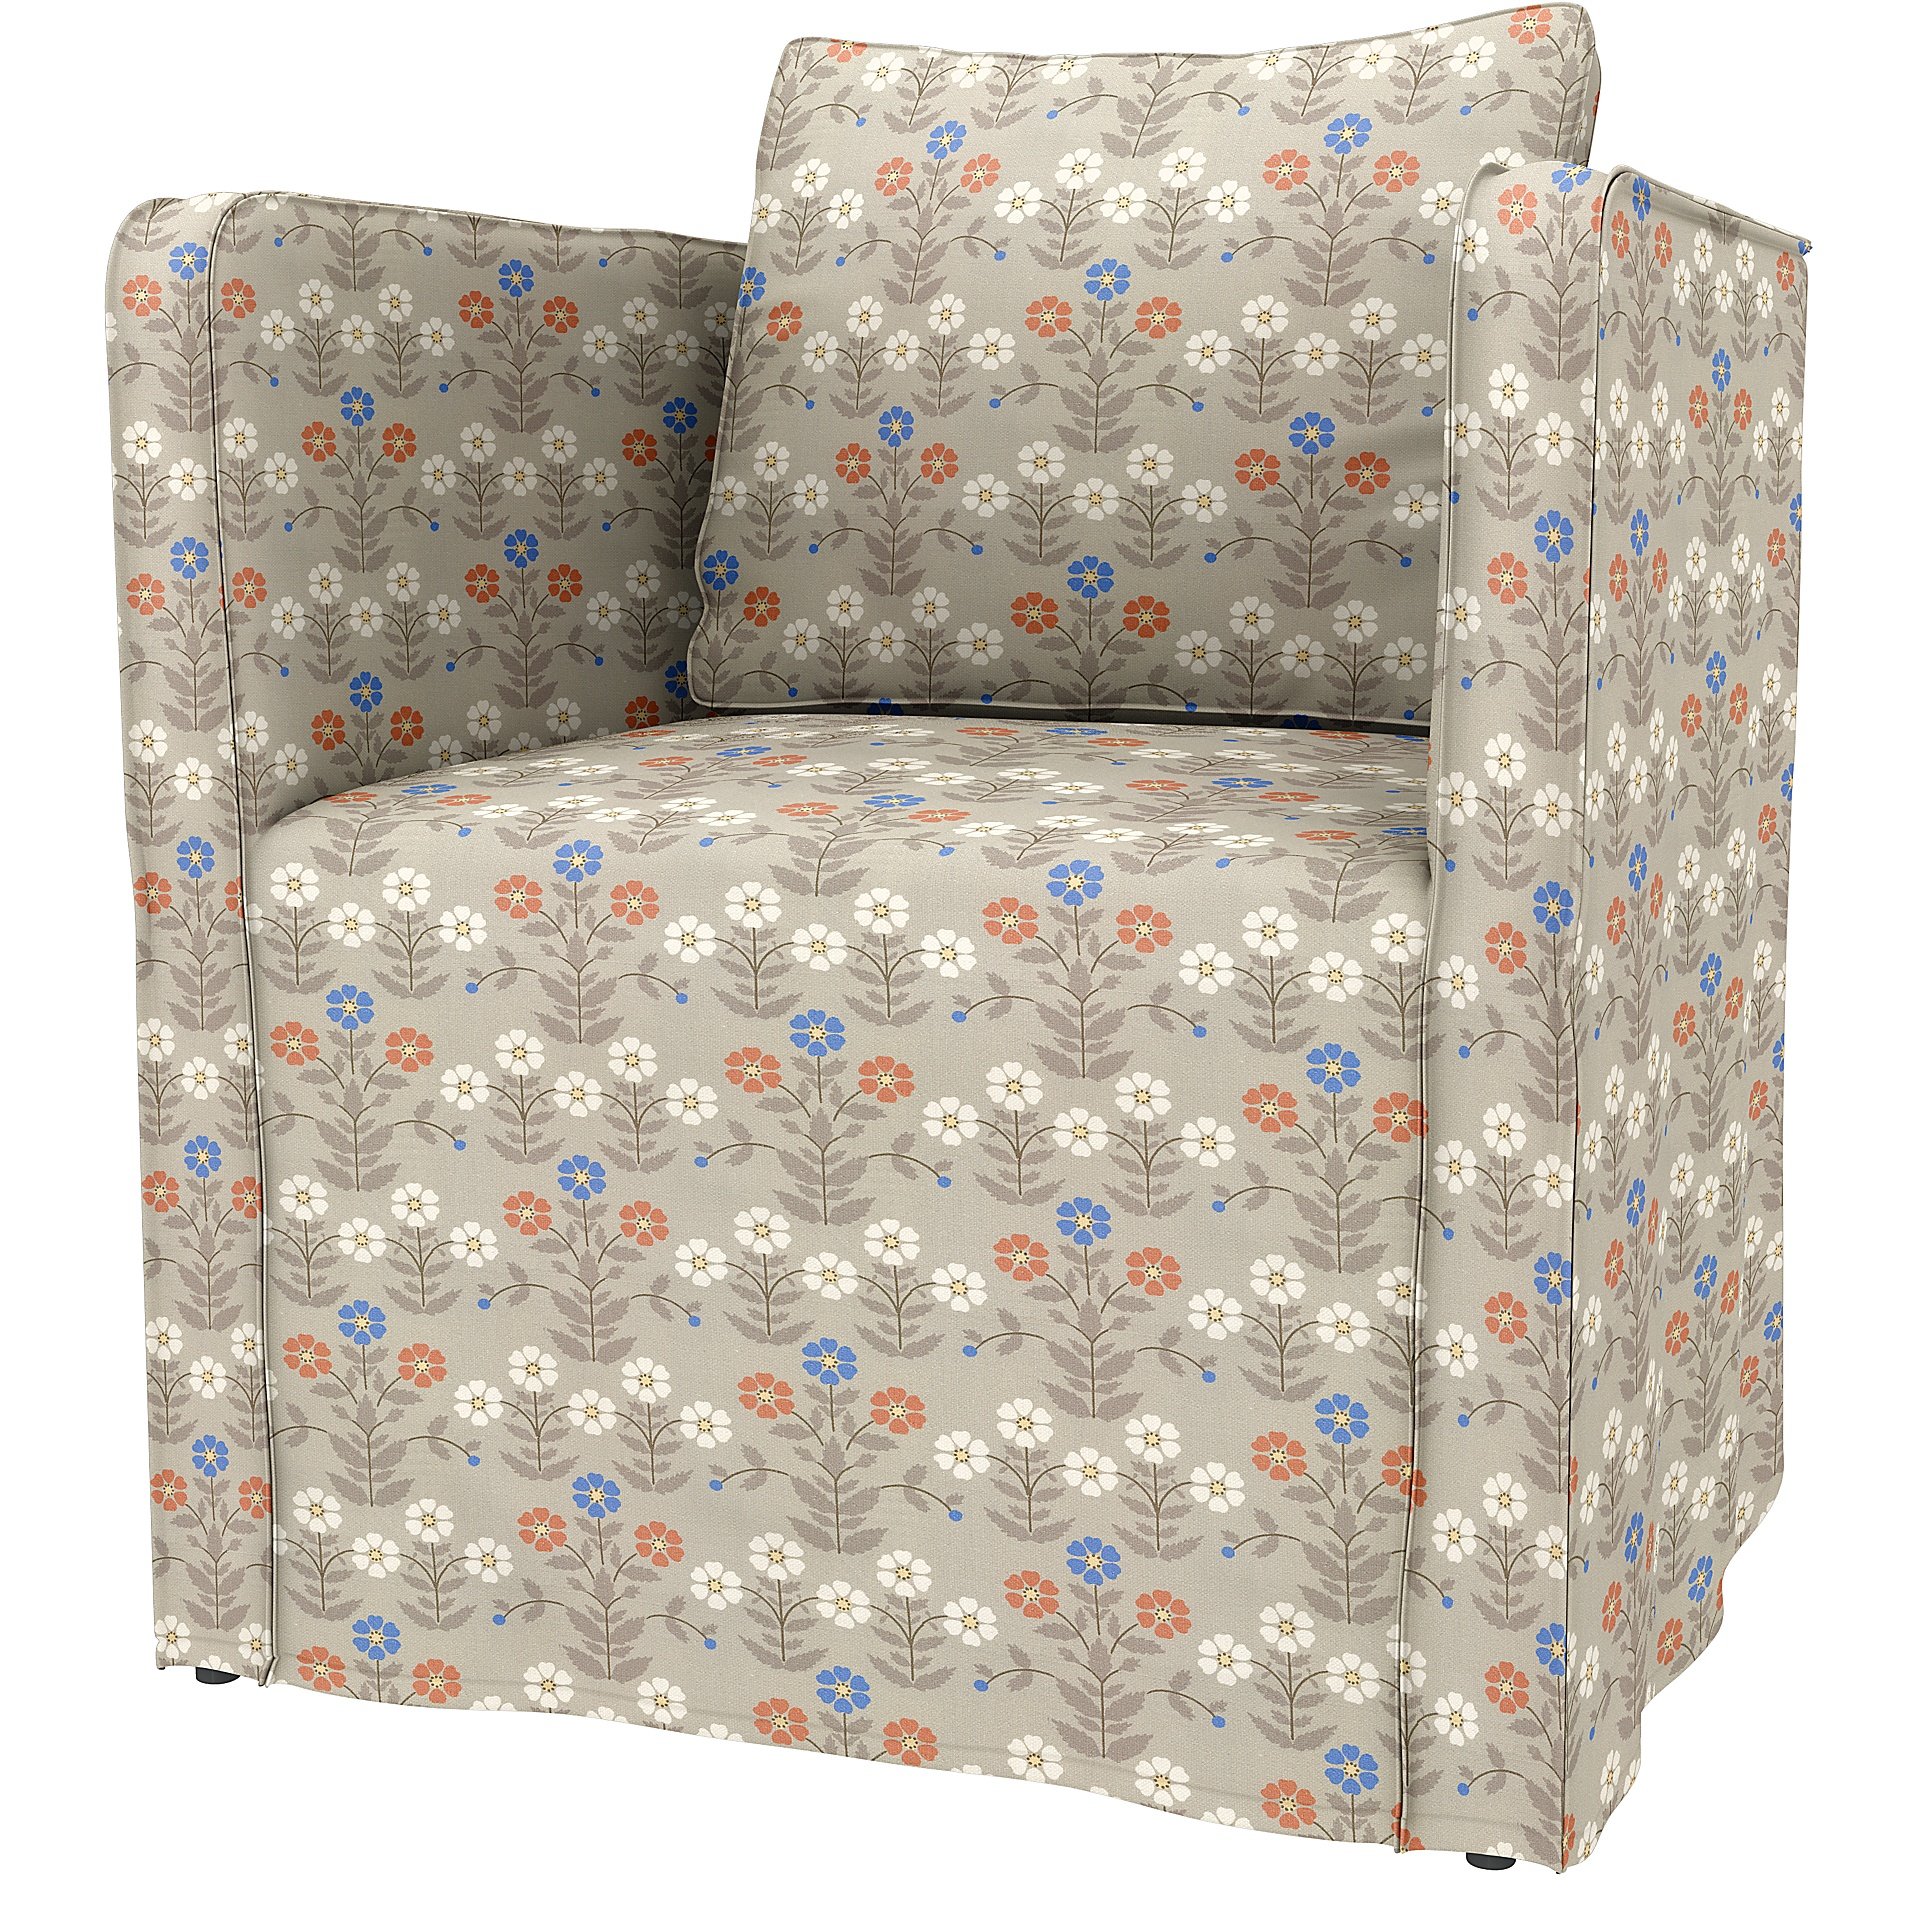 IKEA - Ekero armchair cover, Sippor Blue/Orange, BEMZ x BORASTAPETER COLLECTION - Bemz